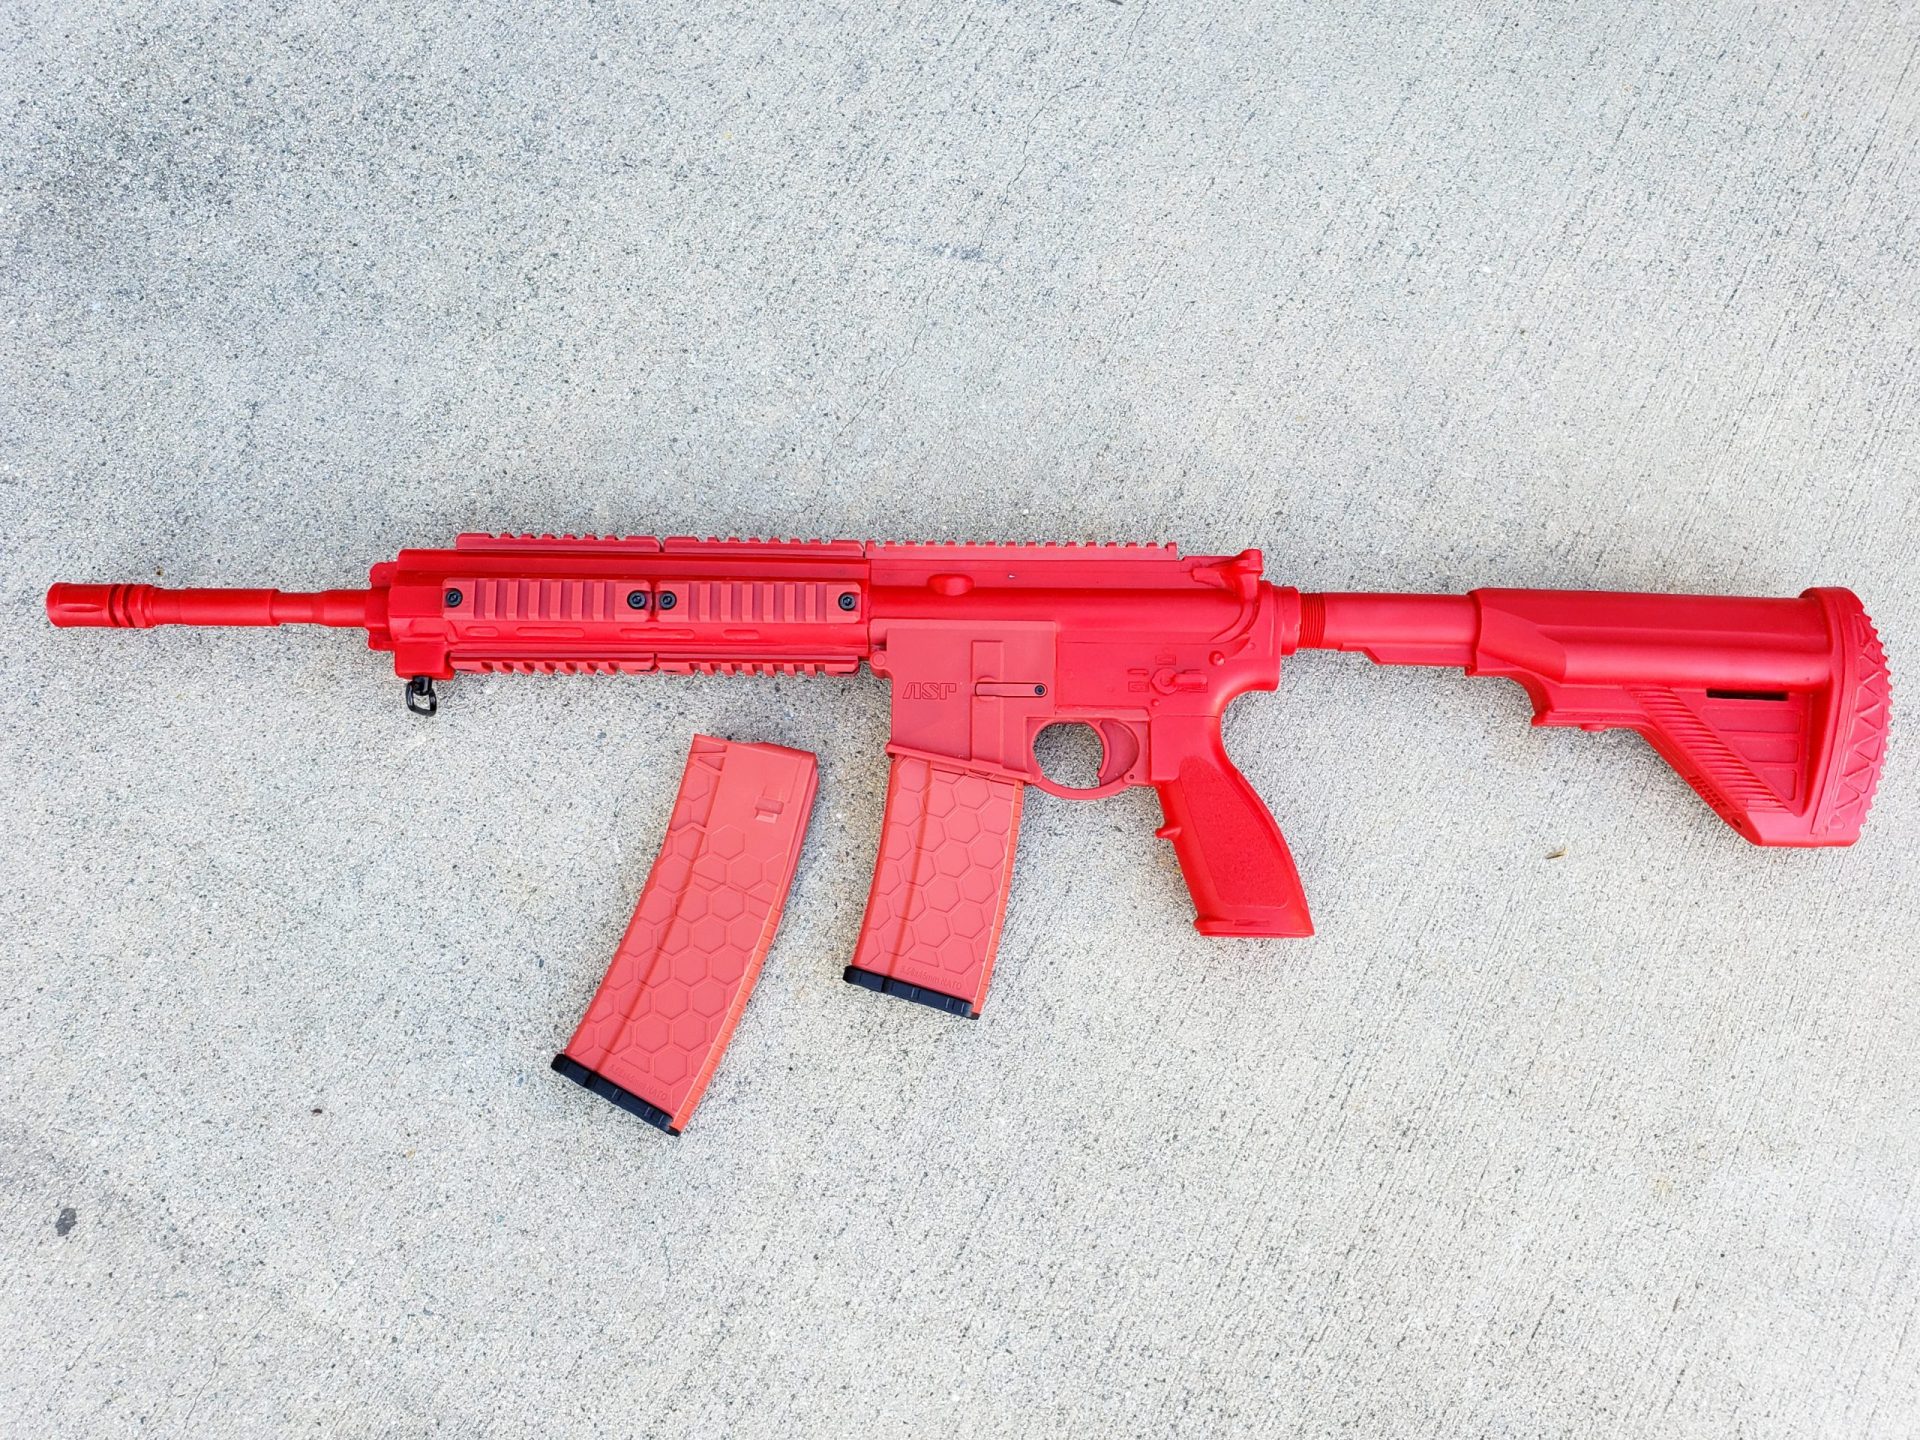 New ASP Enhanced Red Gun: HK416